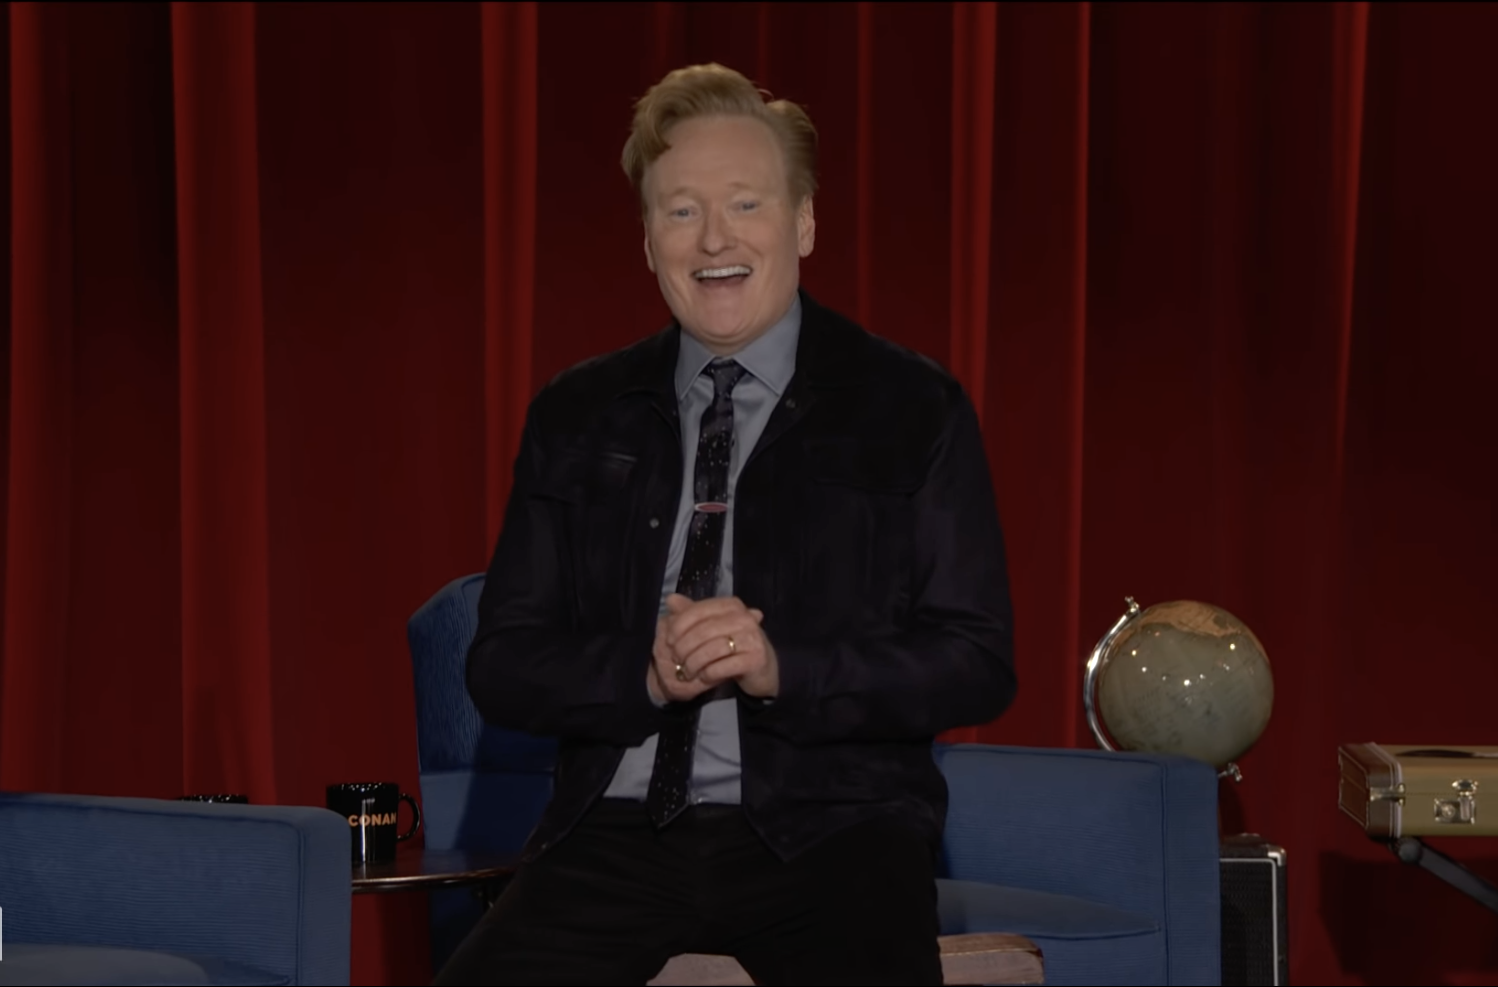 A picture of comedian Conan O'Brien against a dark red curtain.